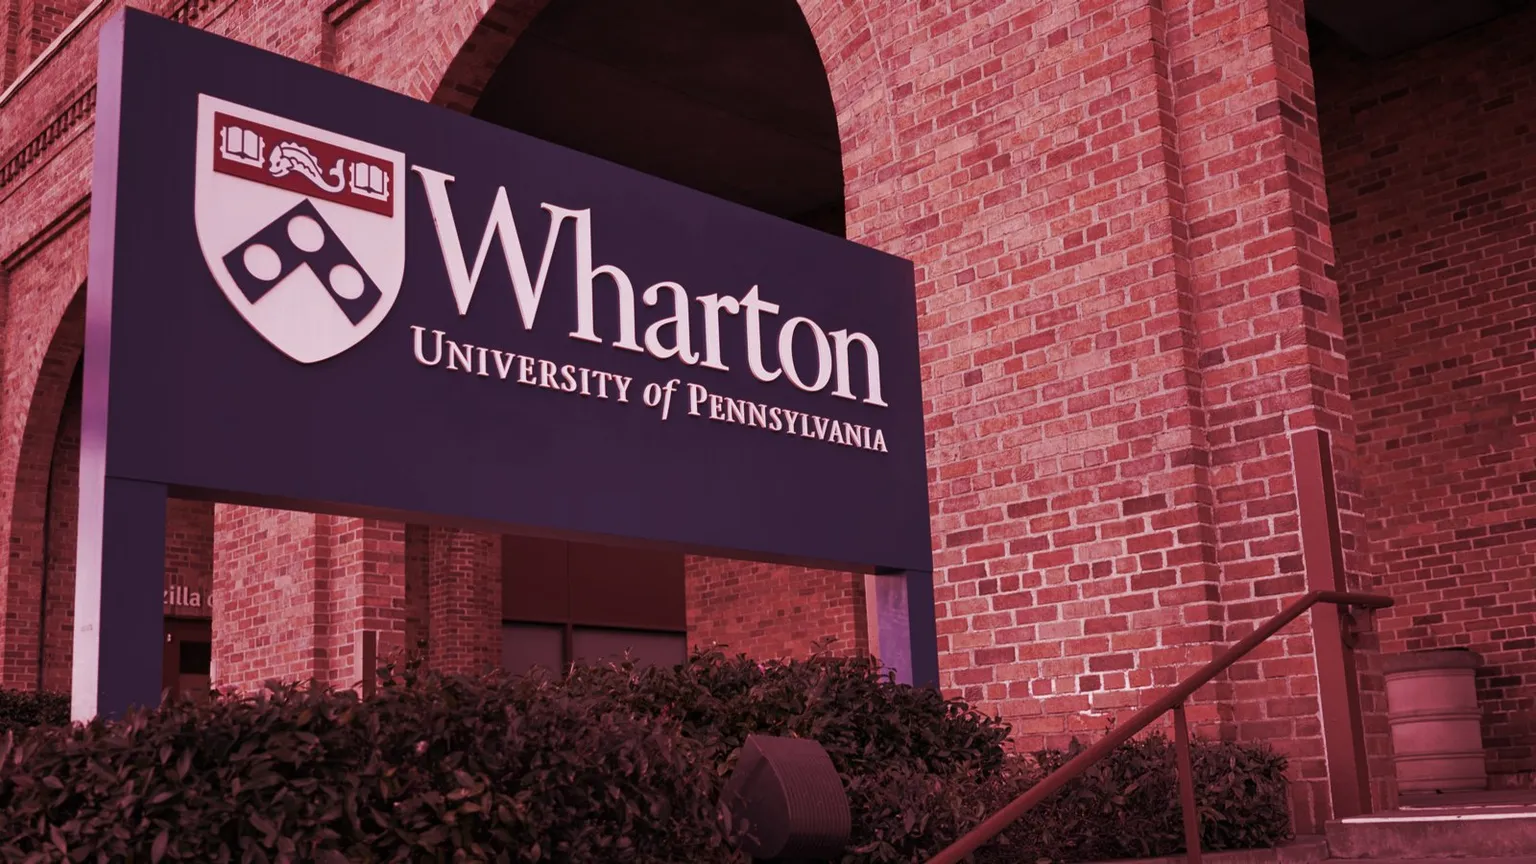 La Escuela Wharton de la Universidad de Pensilvania. Imagen: Shutterstock